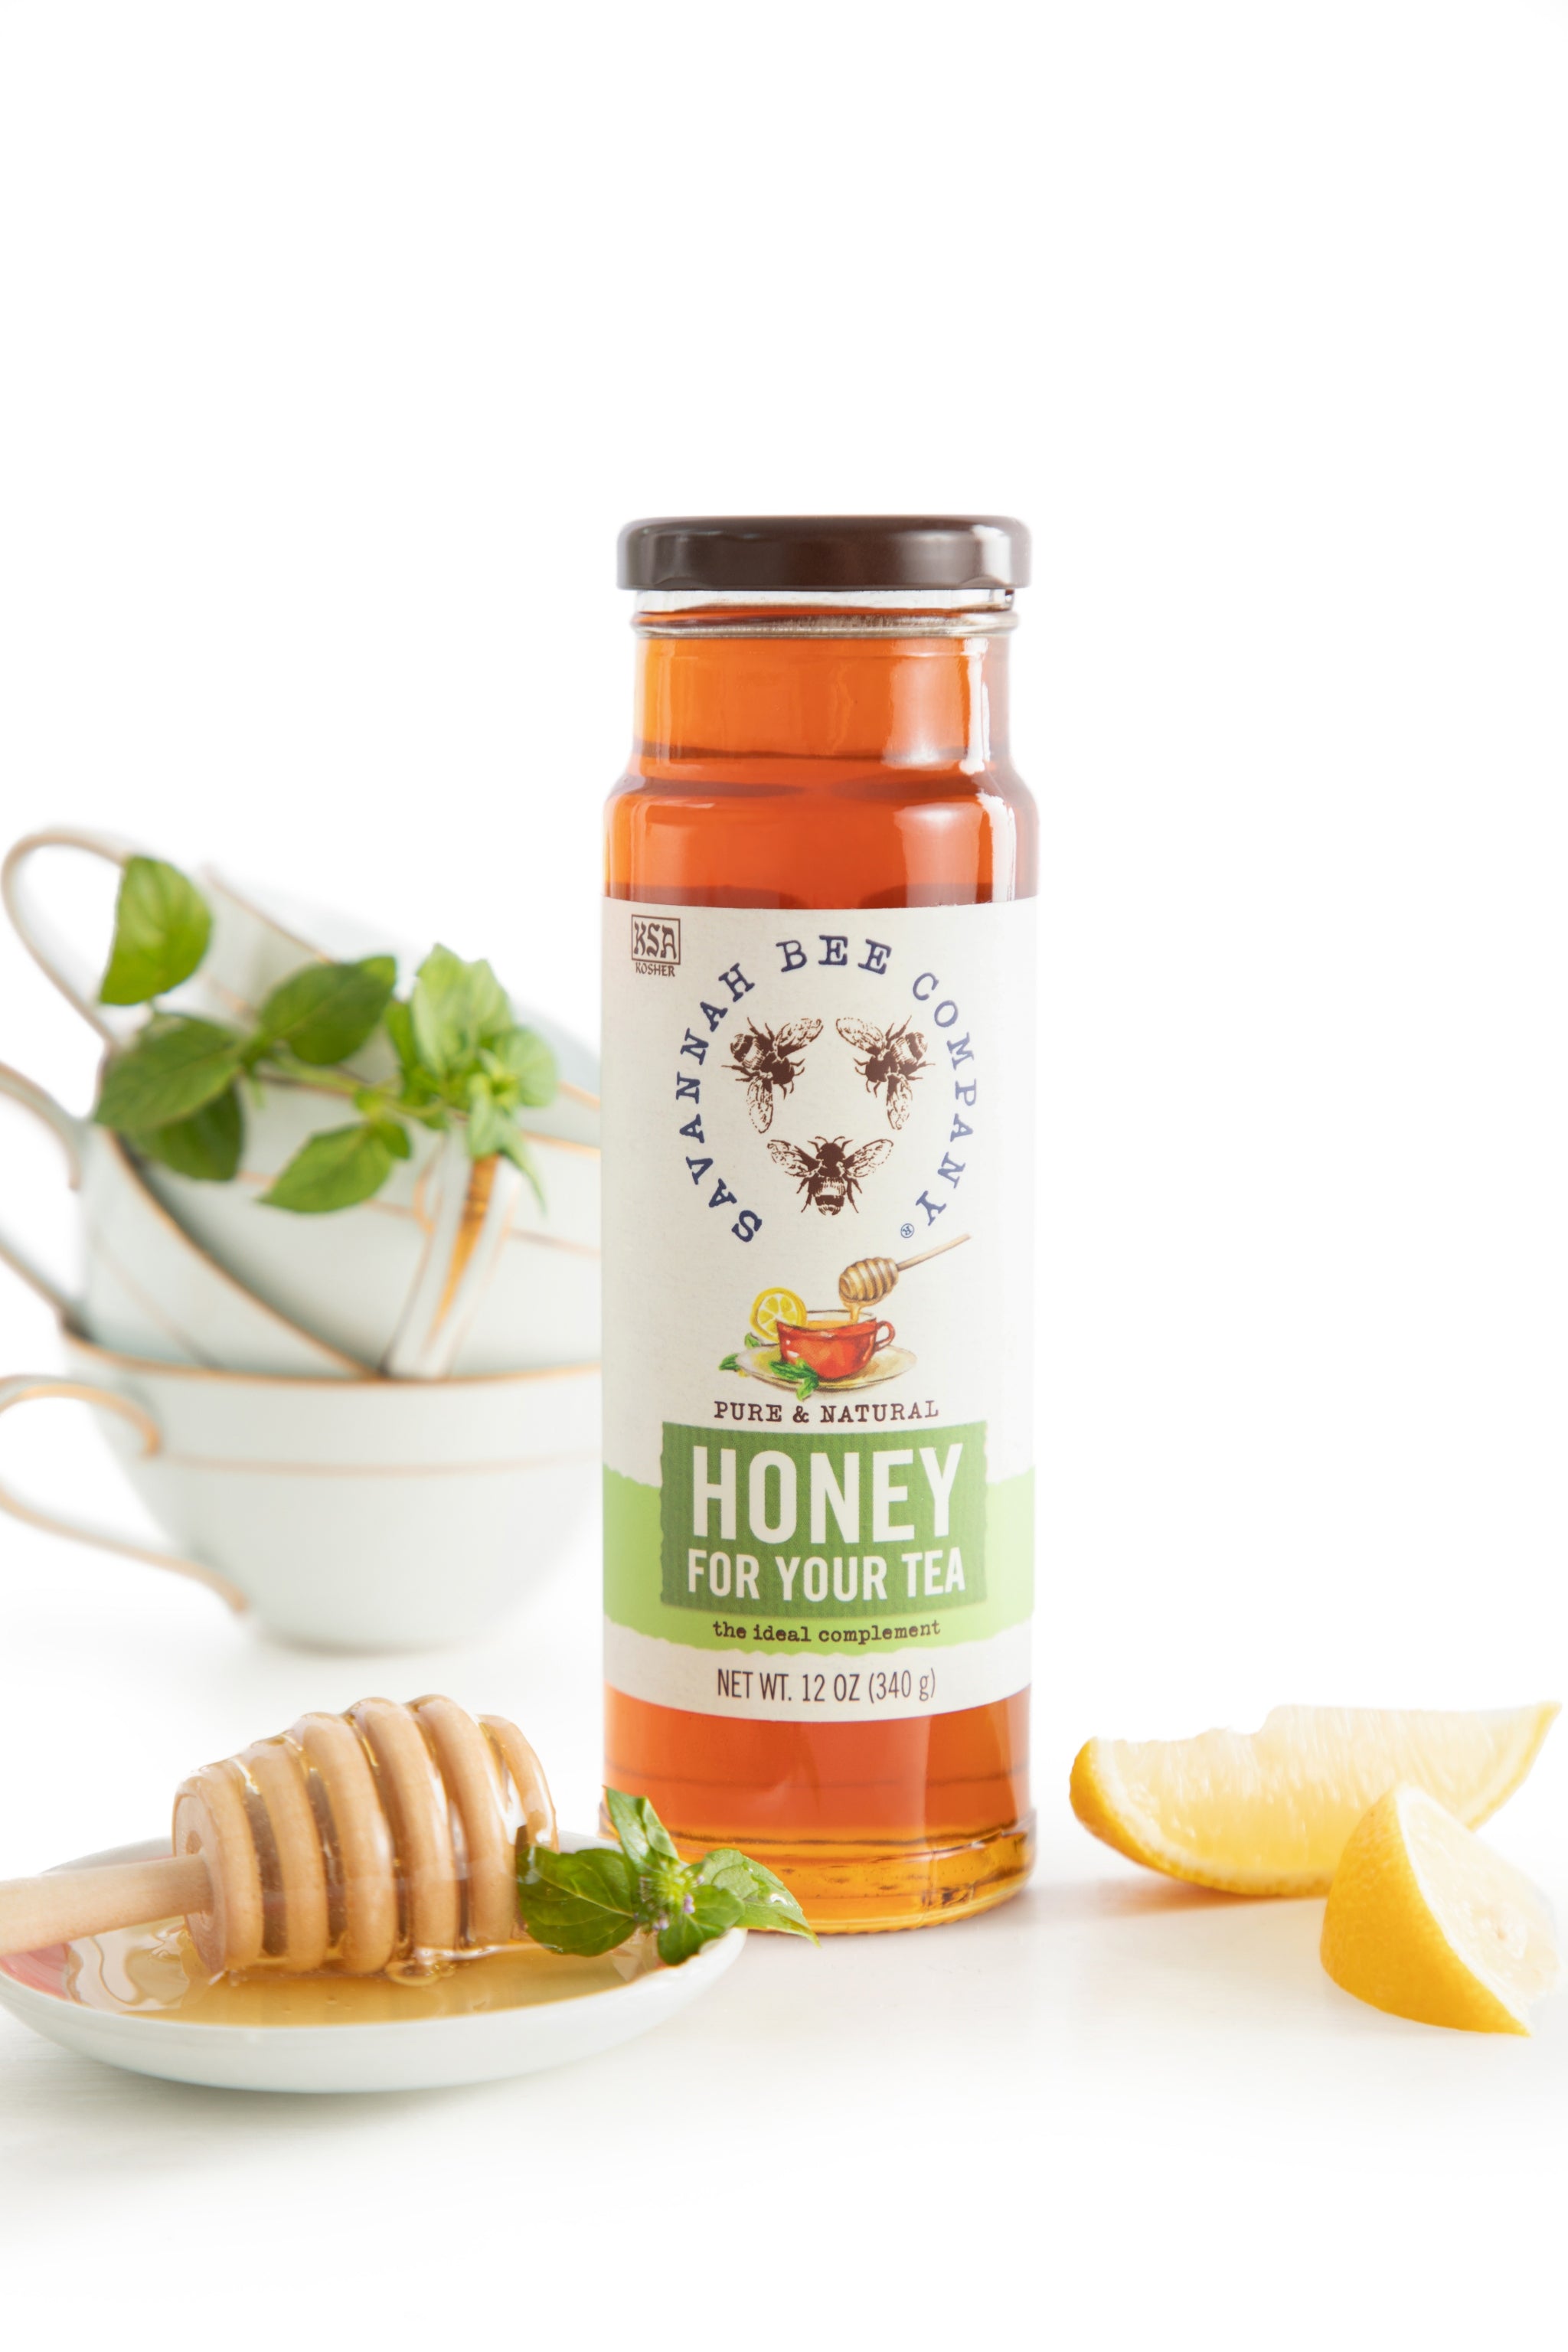 Tuffy Tea Steeper – Milk-n-Honey Tea Company